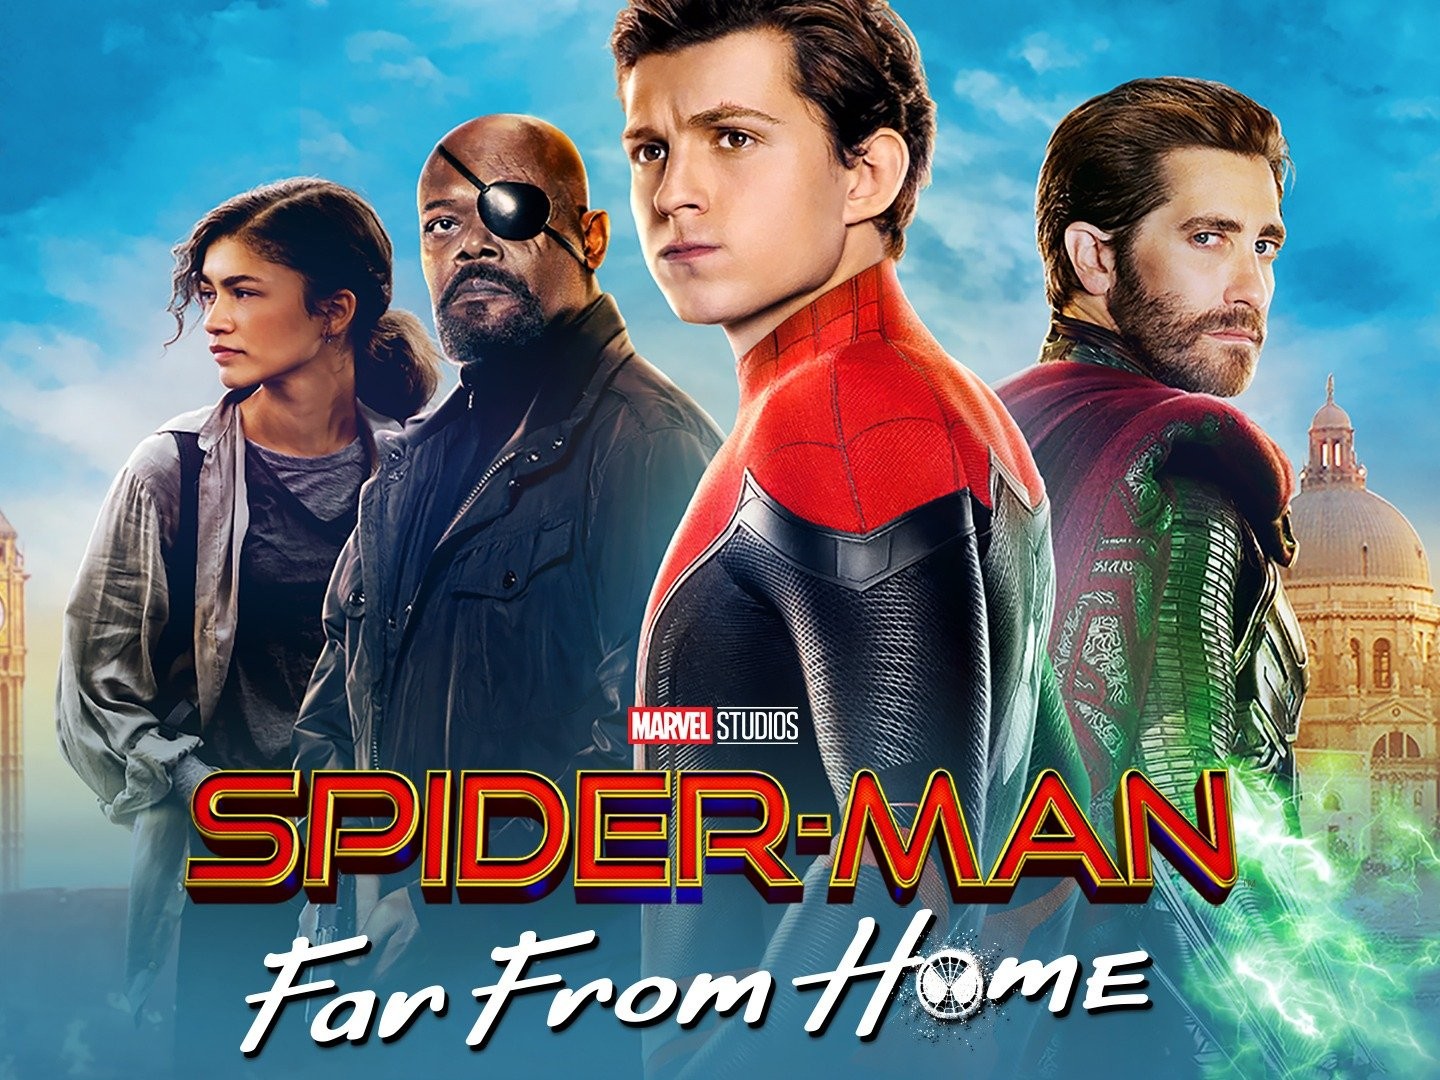 Spider-Man: Far from Home (2019) - IMDb